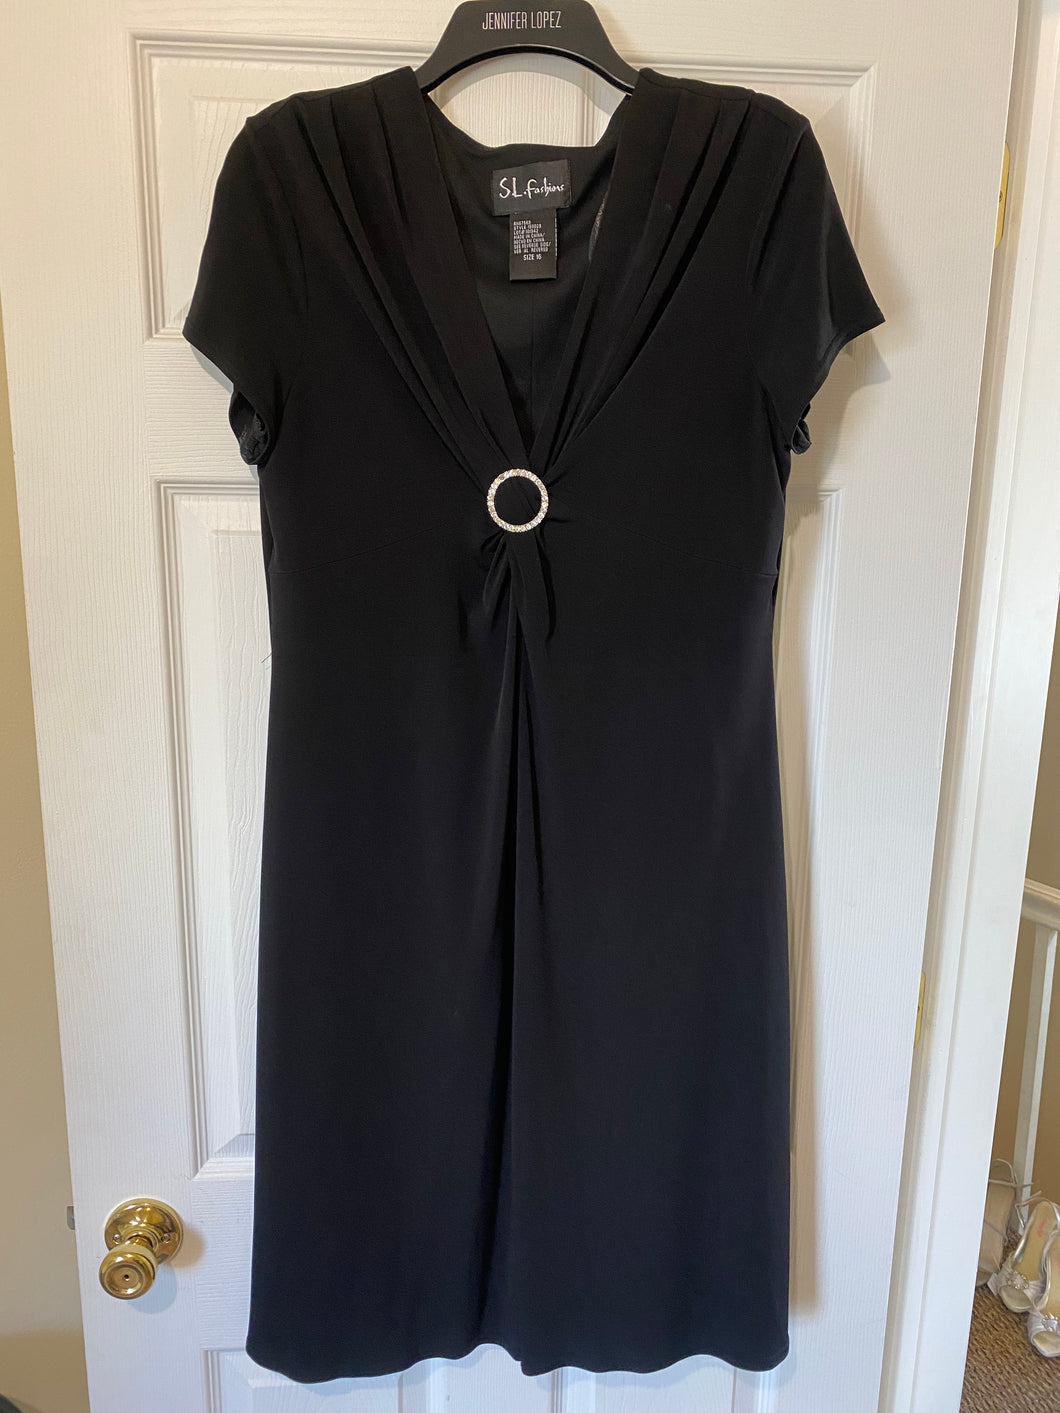 BITE100-G Black Casual Dress. Size 16